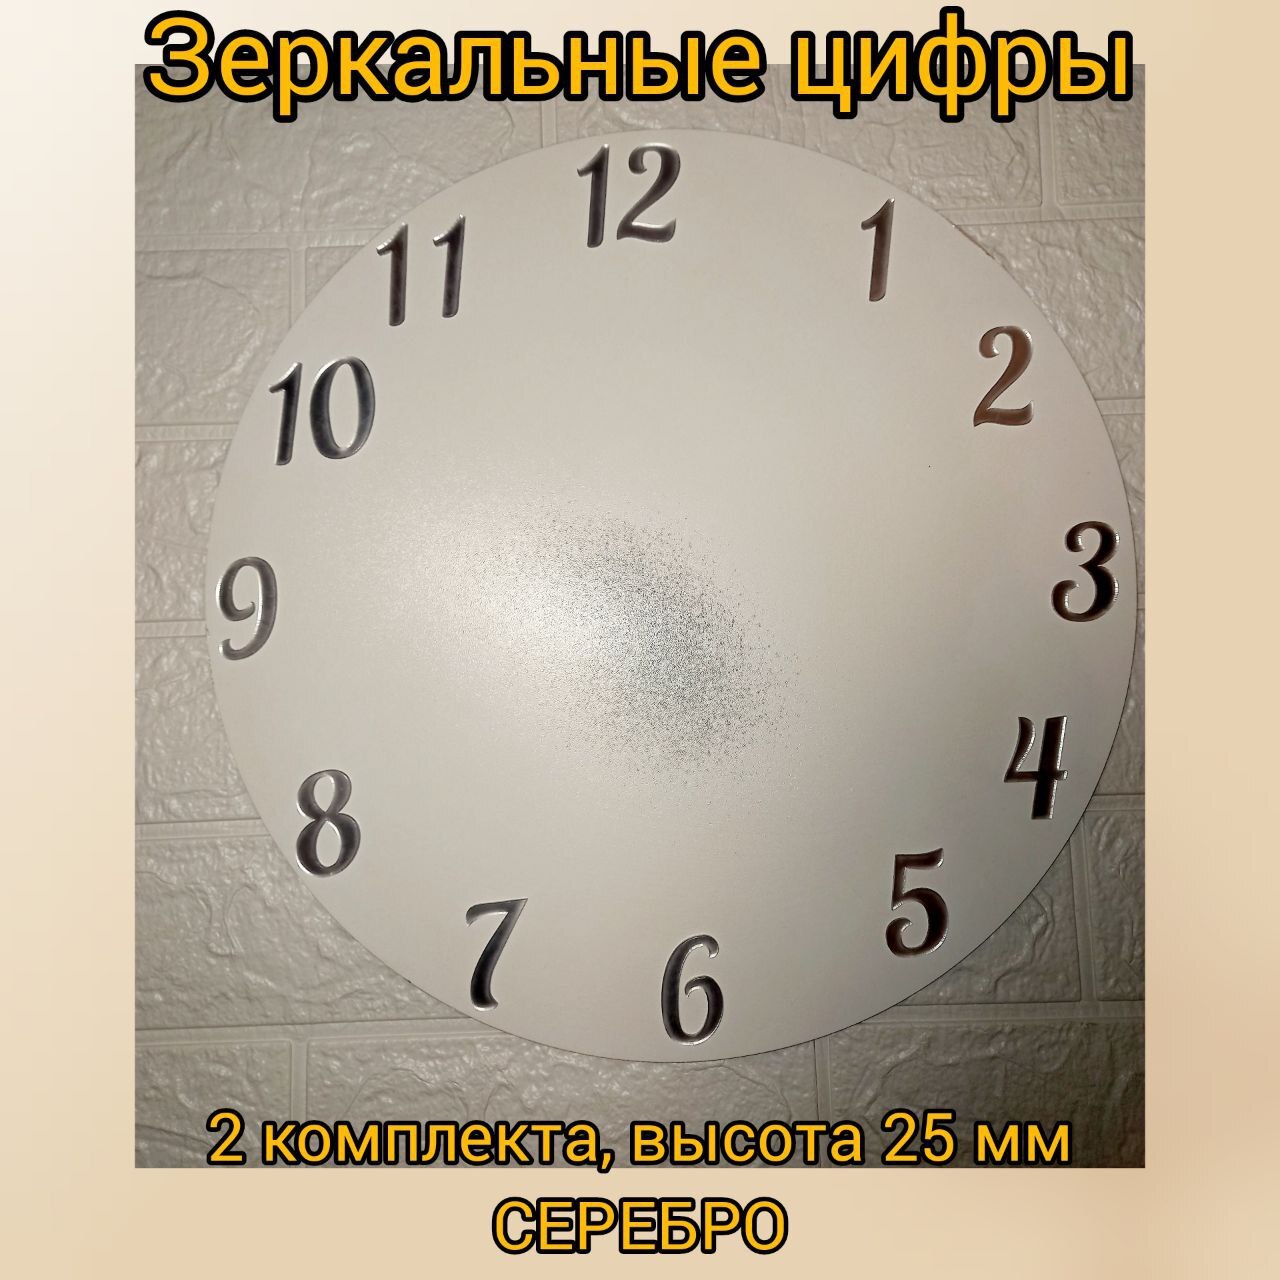 Зеркальные цифры для часов. Часы с арабскими цифрами. Цифры на часах римские или арабские. Зеркальные цифры 25. 6 часов по цифрам